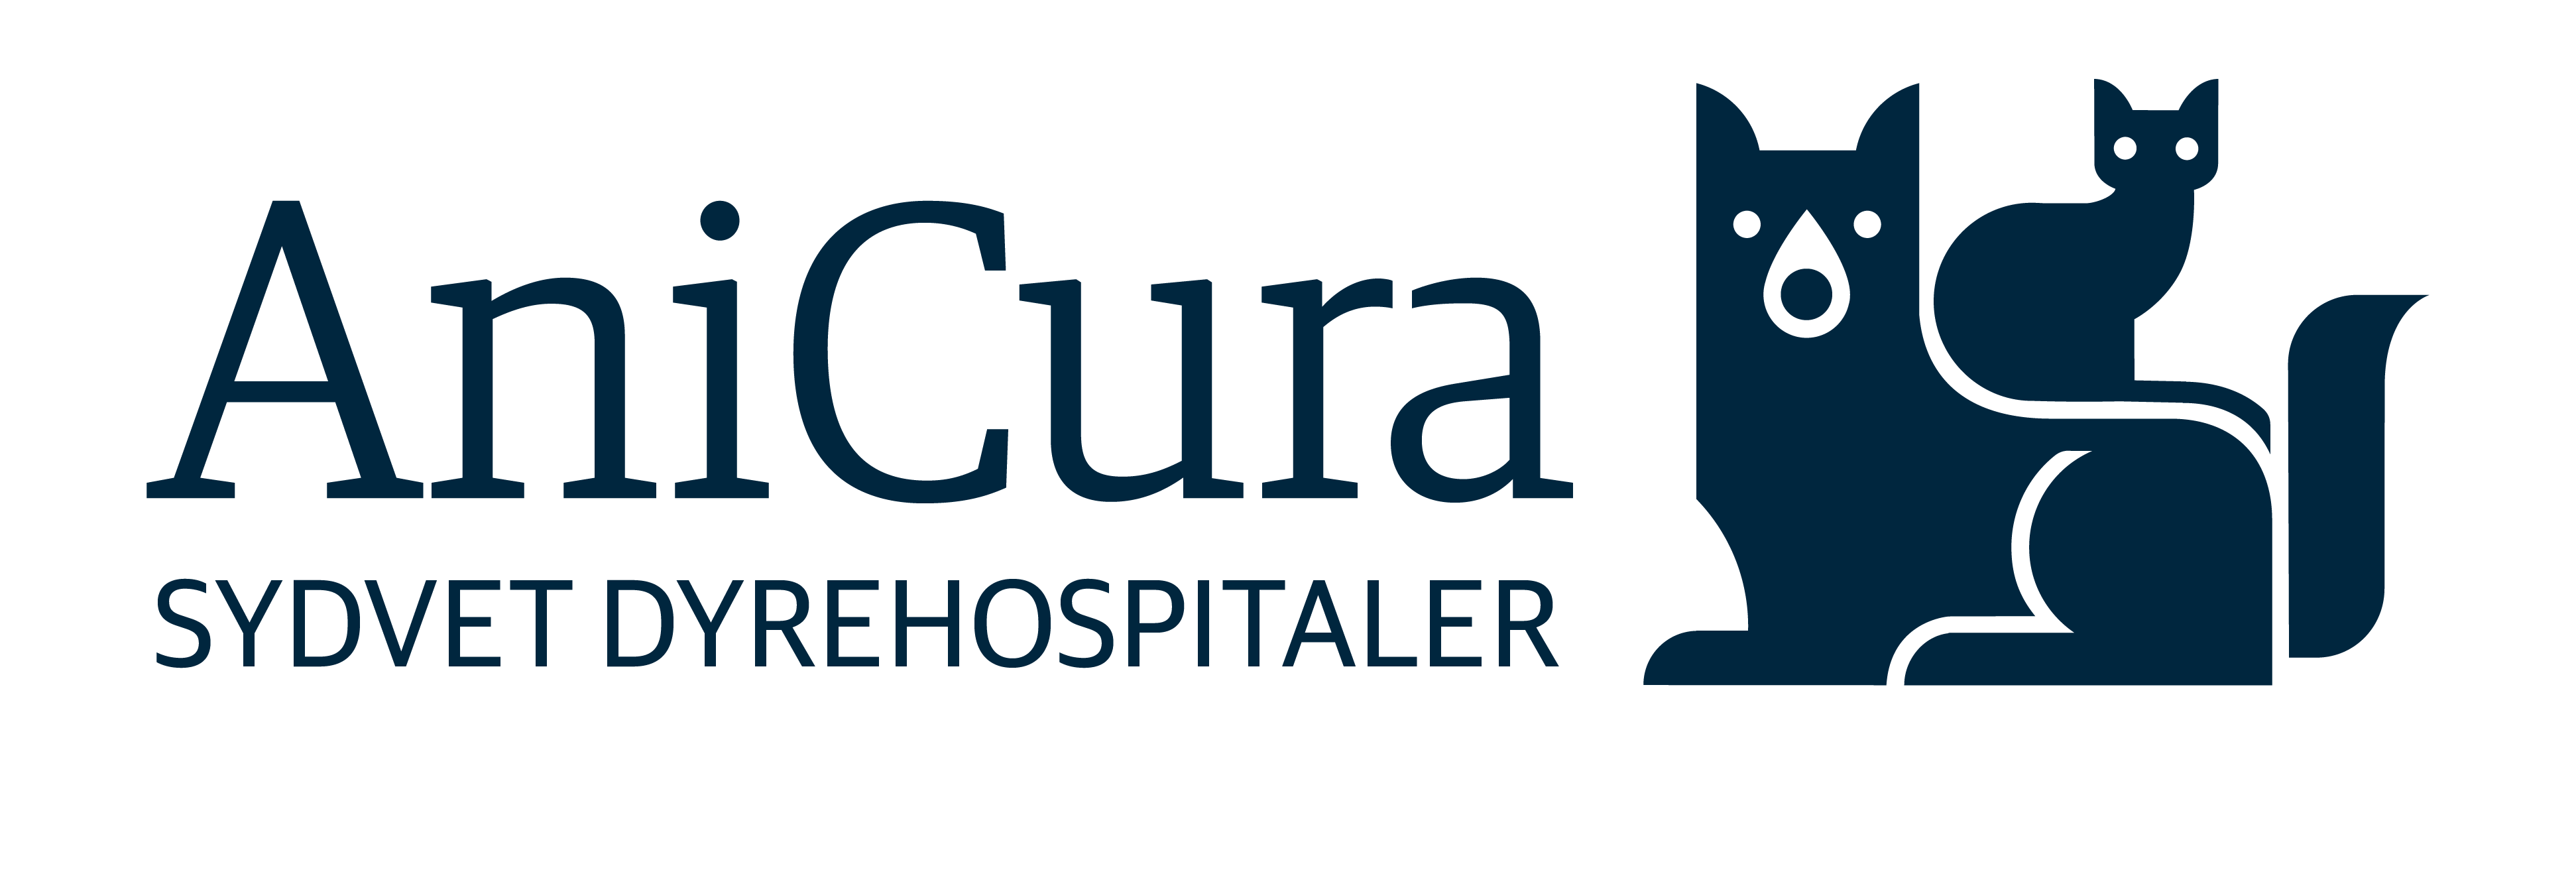 AniCura Sydvet Dyrehospitaler i Sommersted og Rødding logo